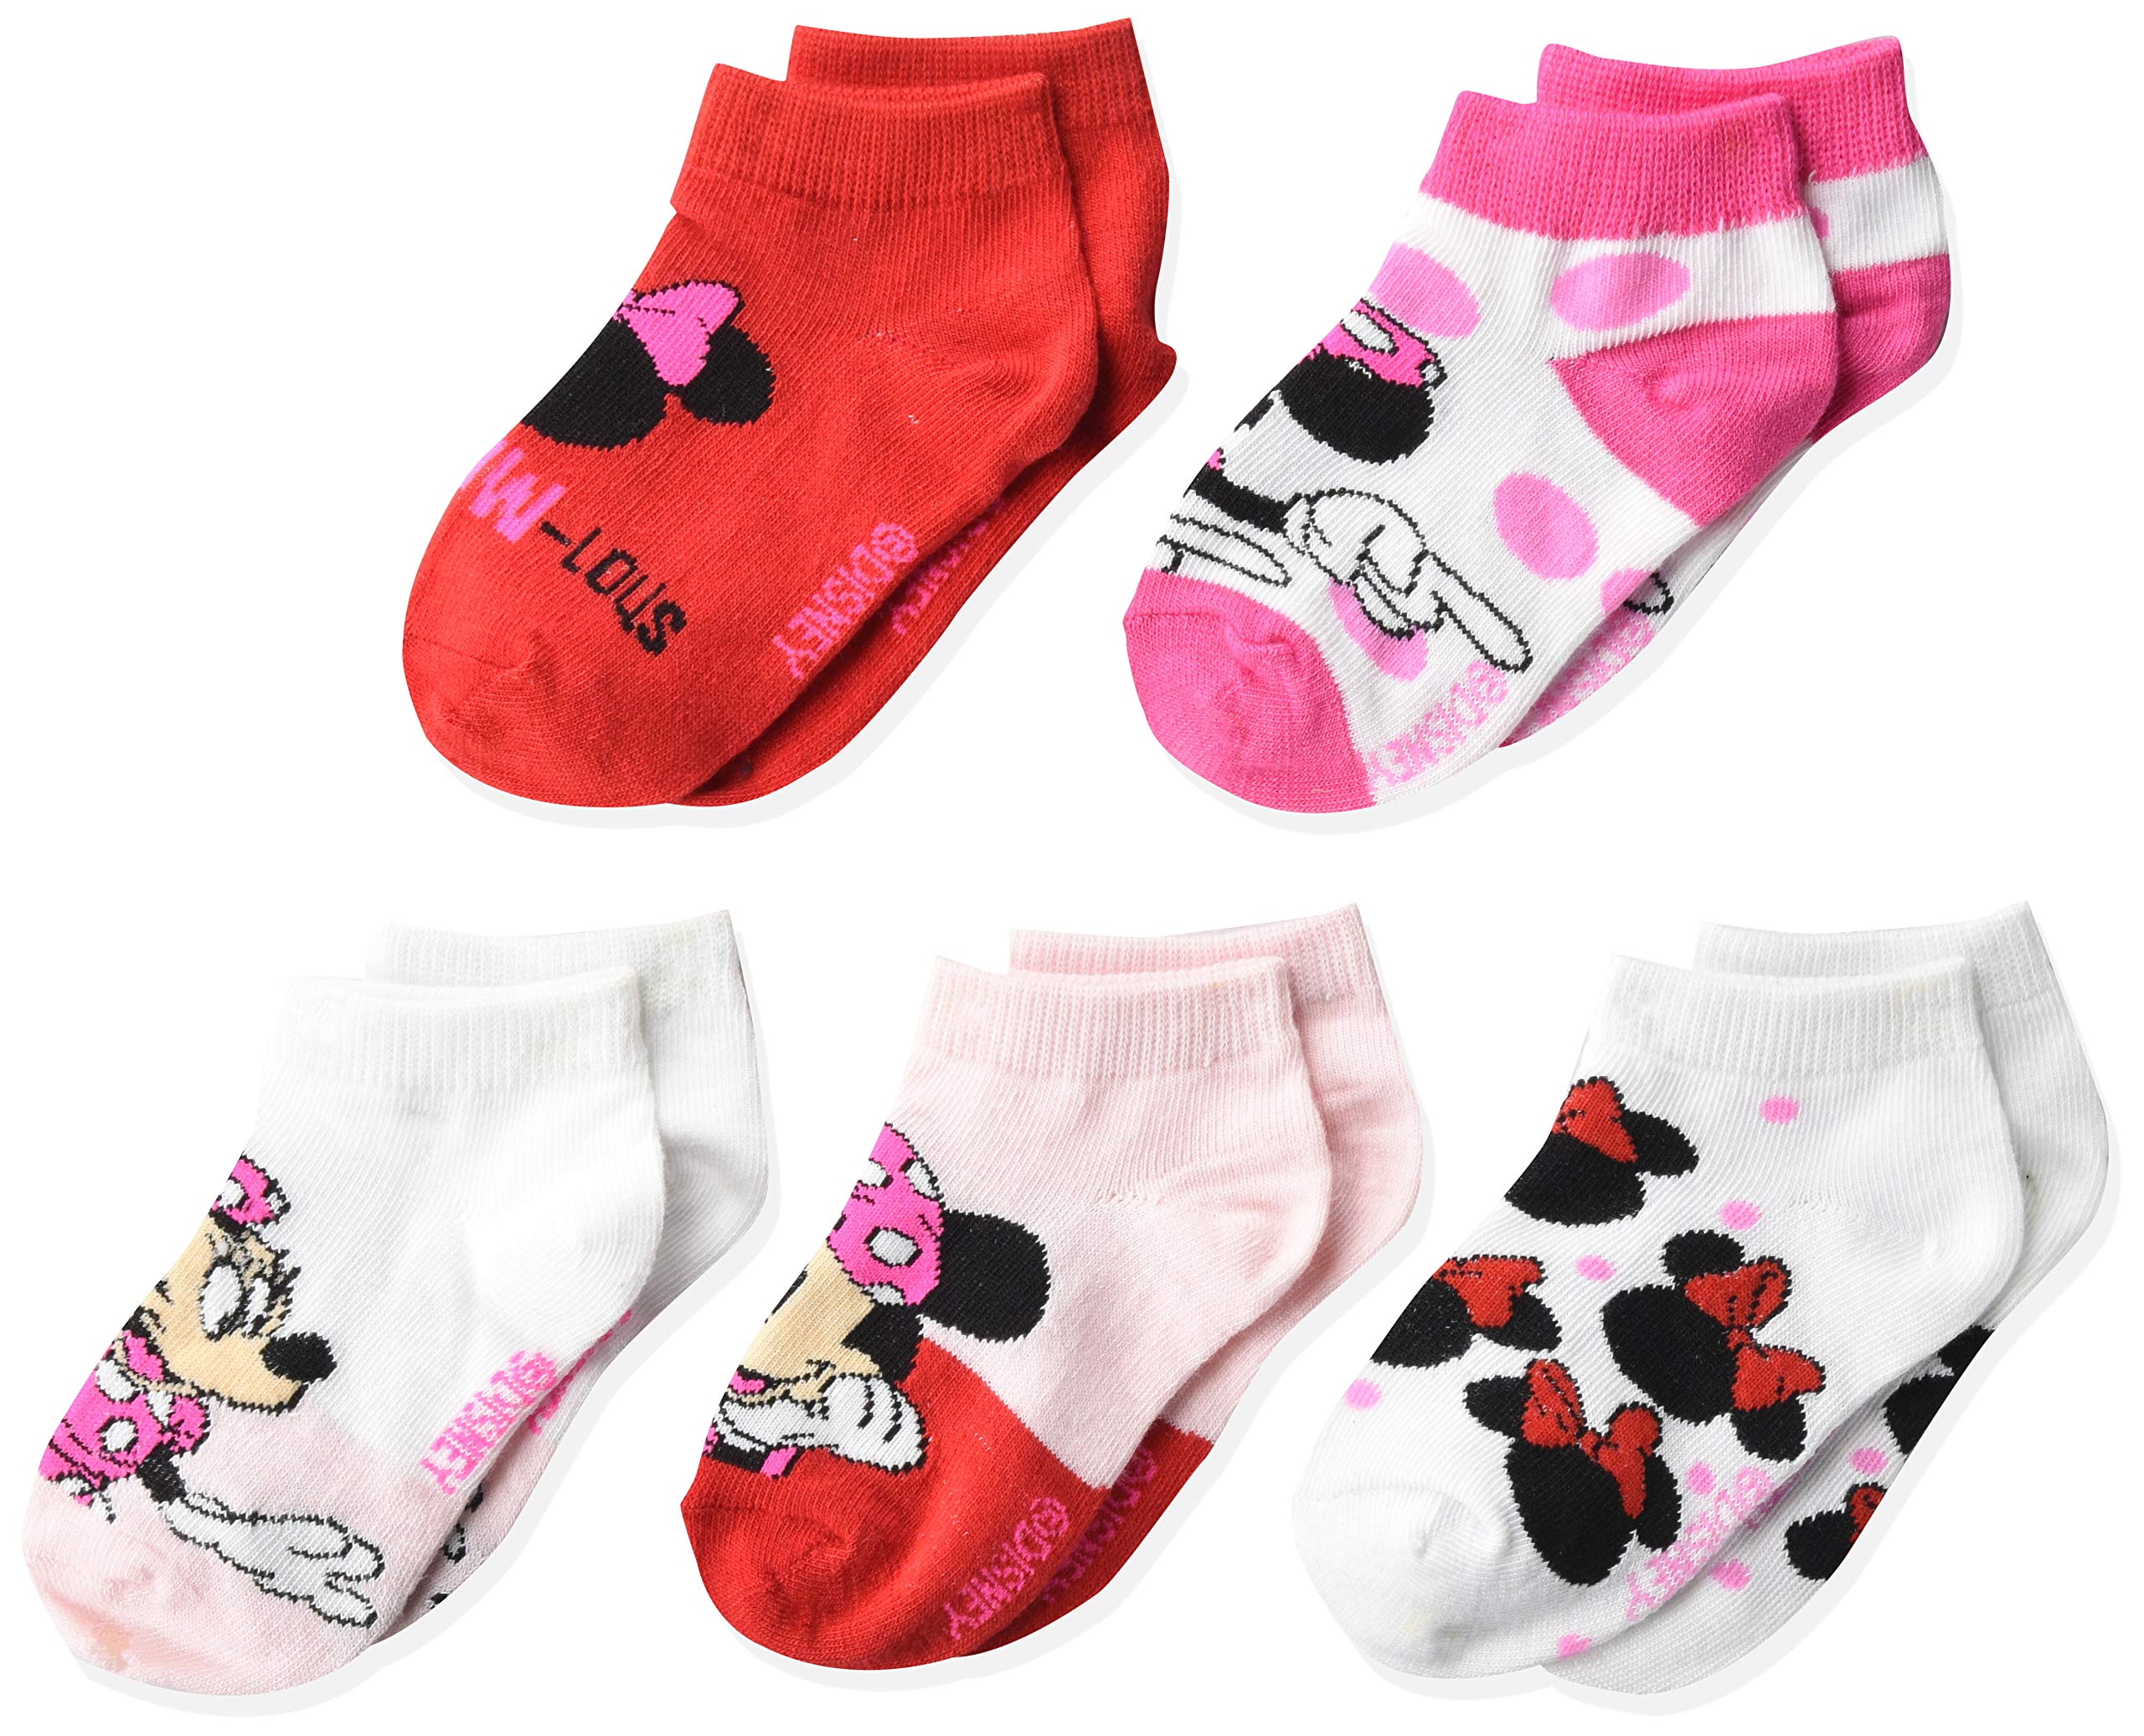 Disney Girls' Minnie Mouse 5 Pack Shorty Socks